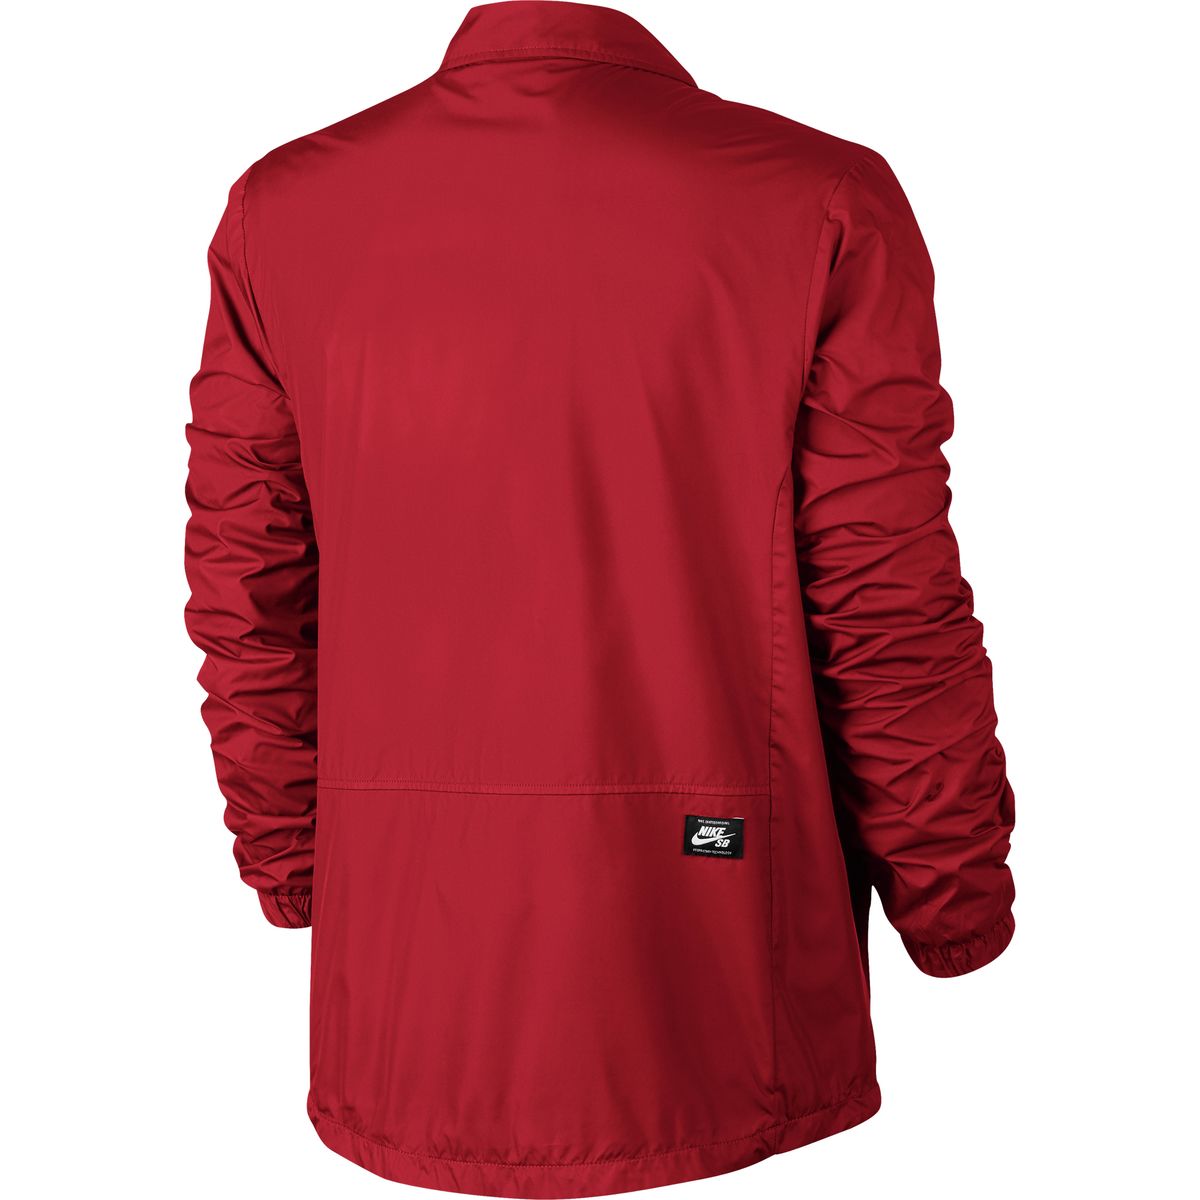 Nike SB Shield Jacket - Men's - Clothing